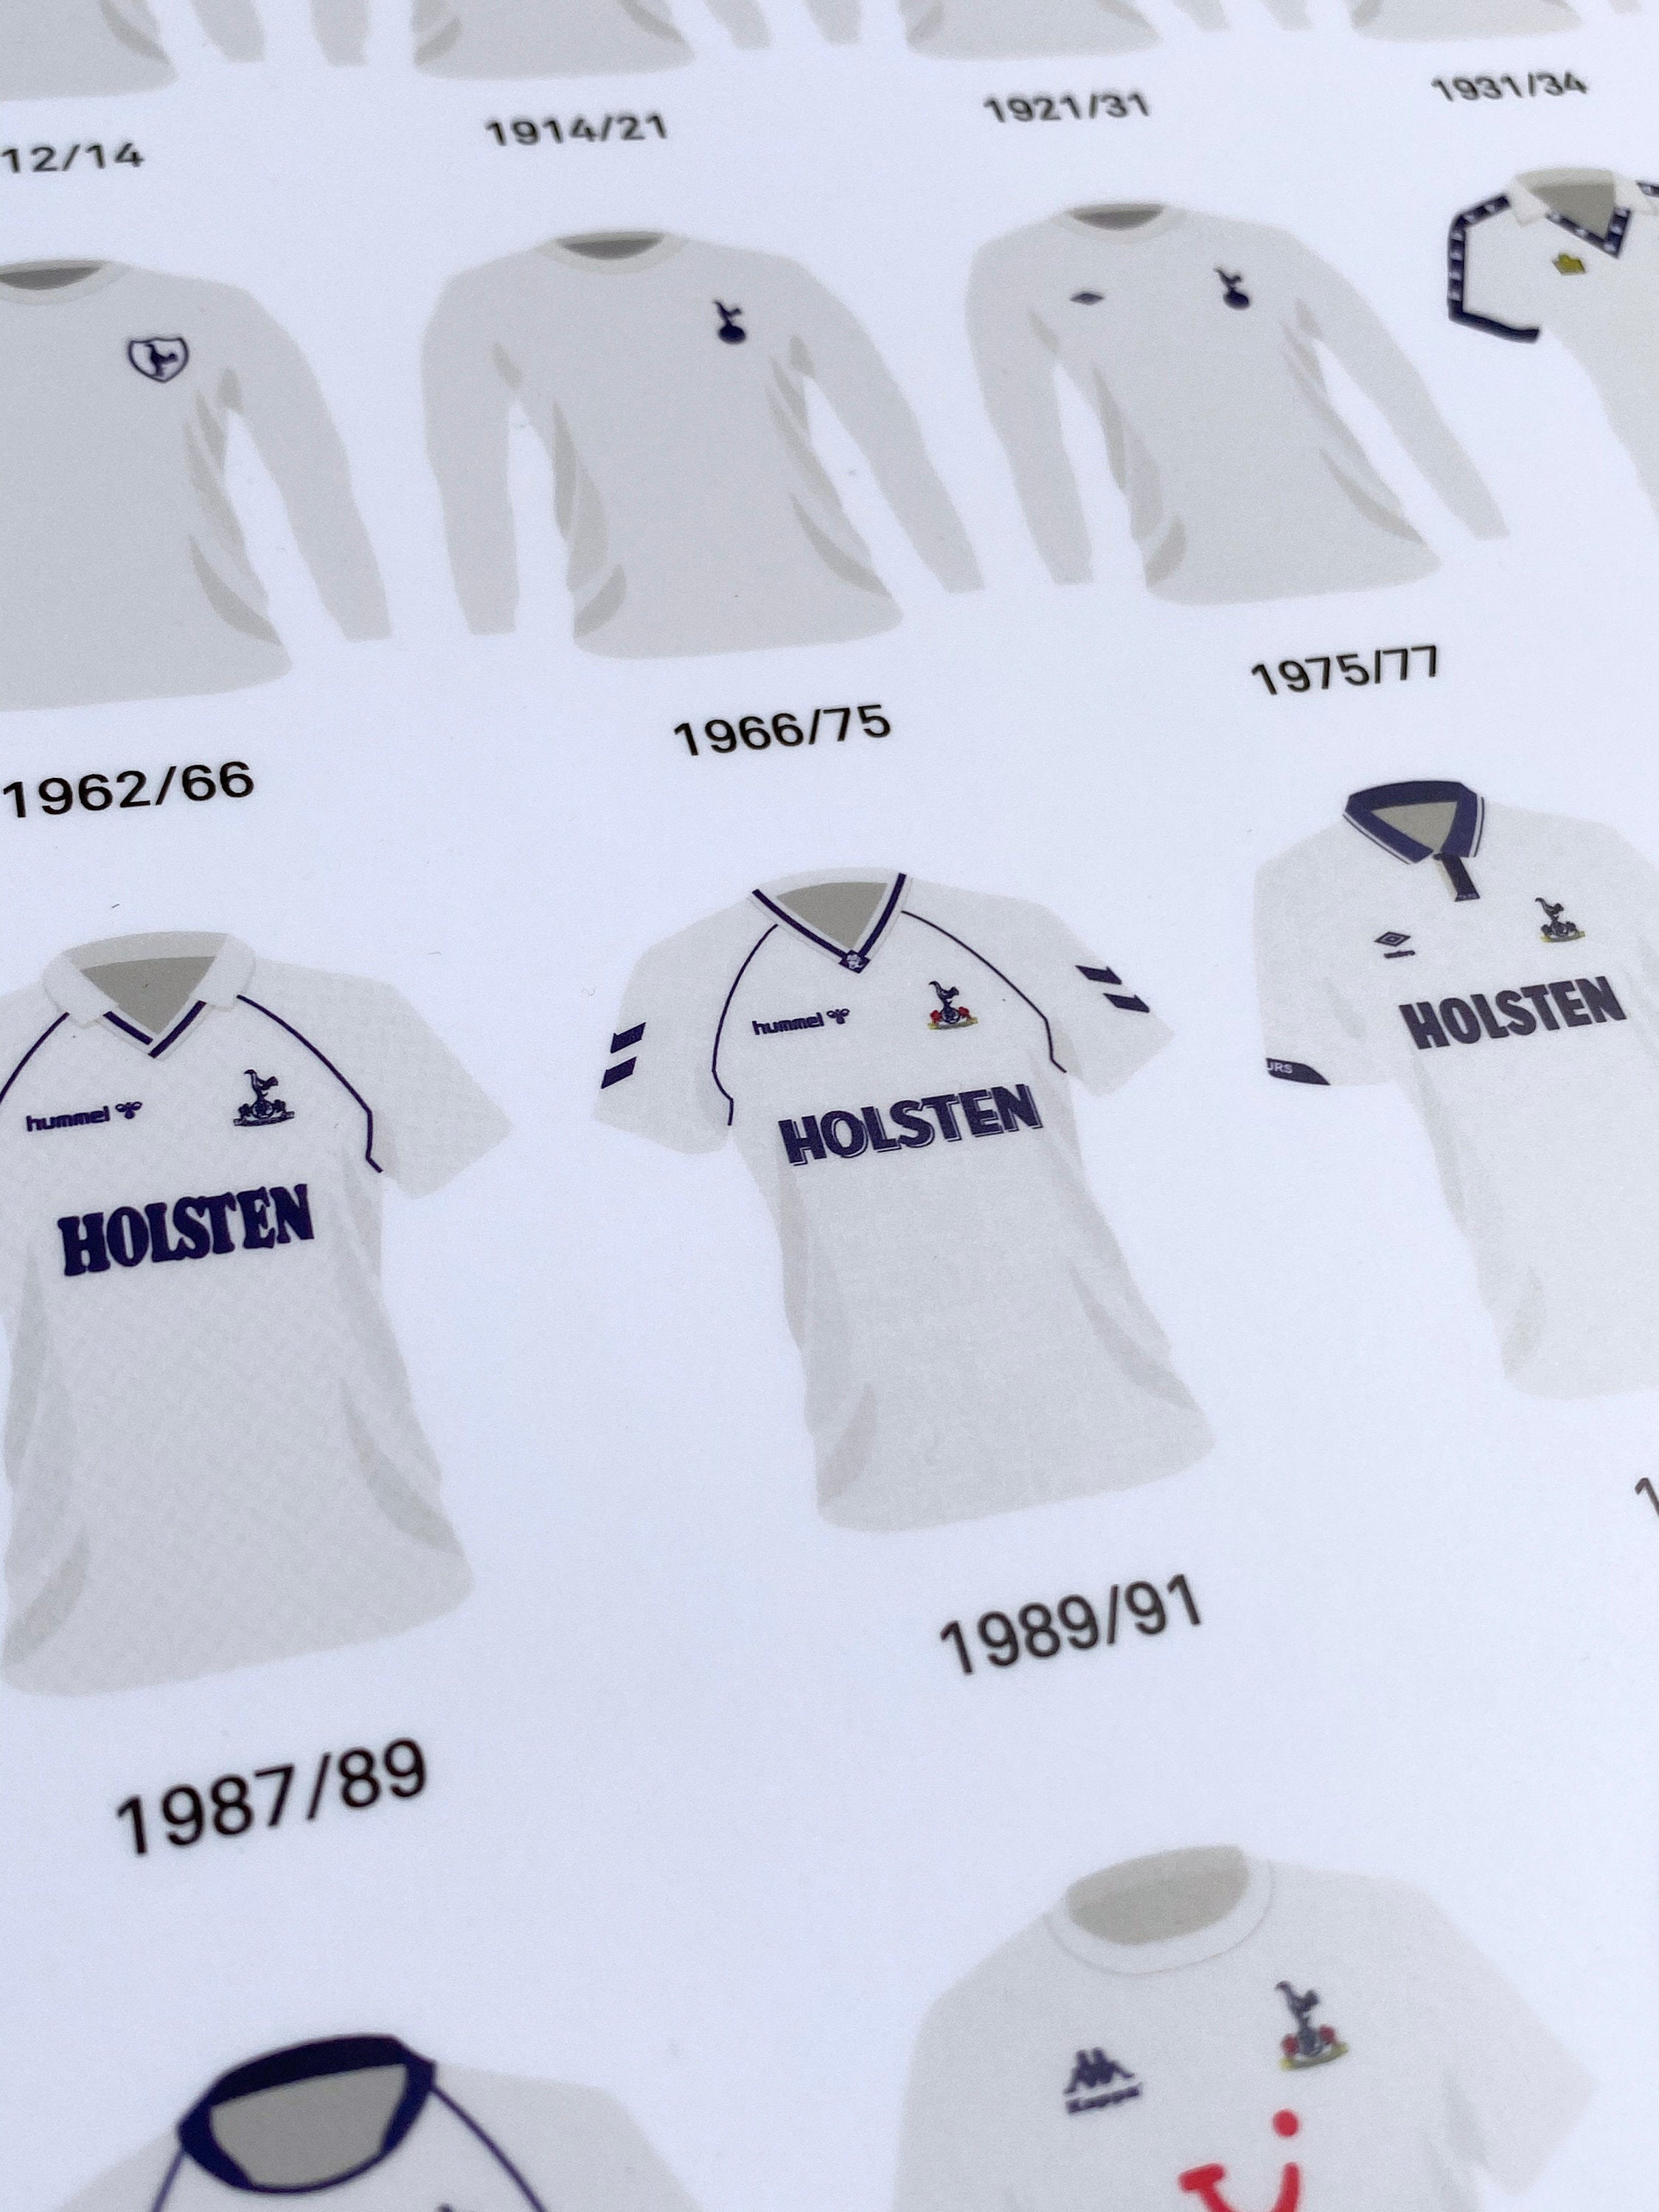 Tottenham Hotspur Kit History - Champions League Shirts